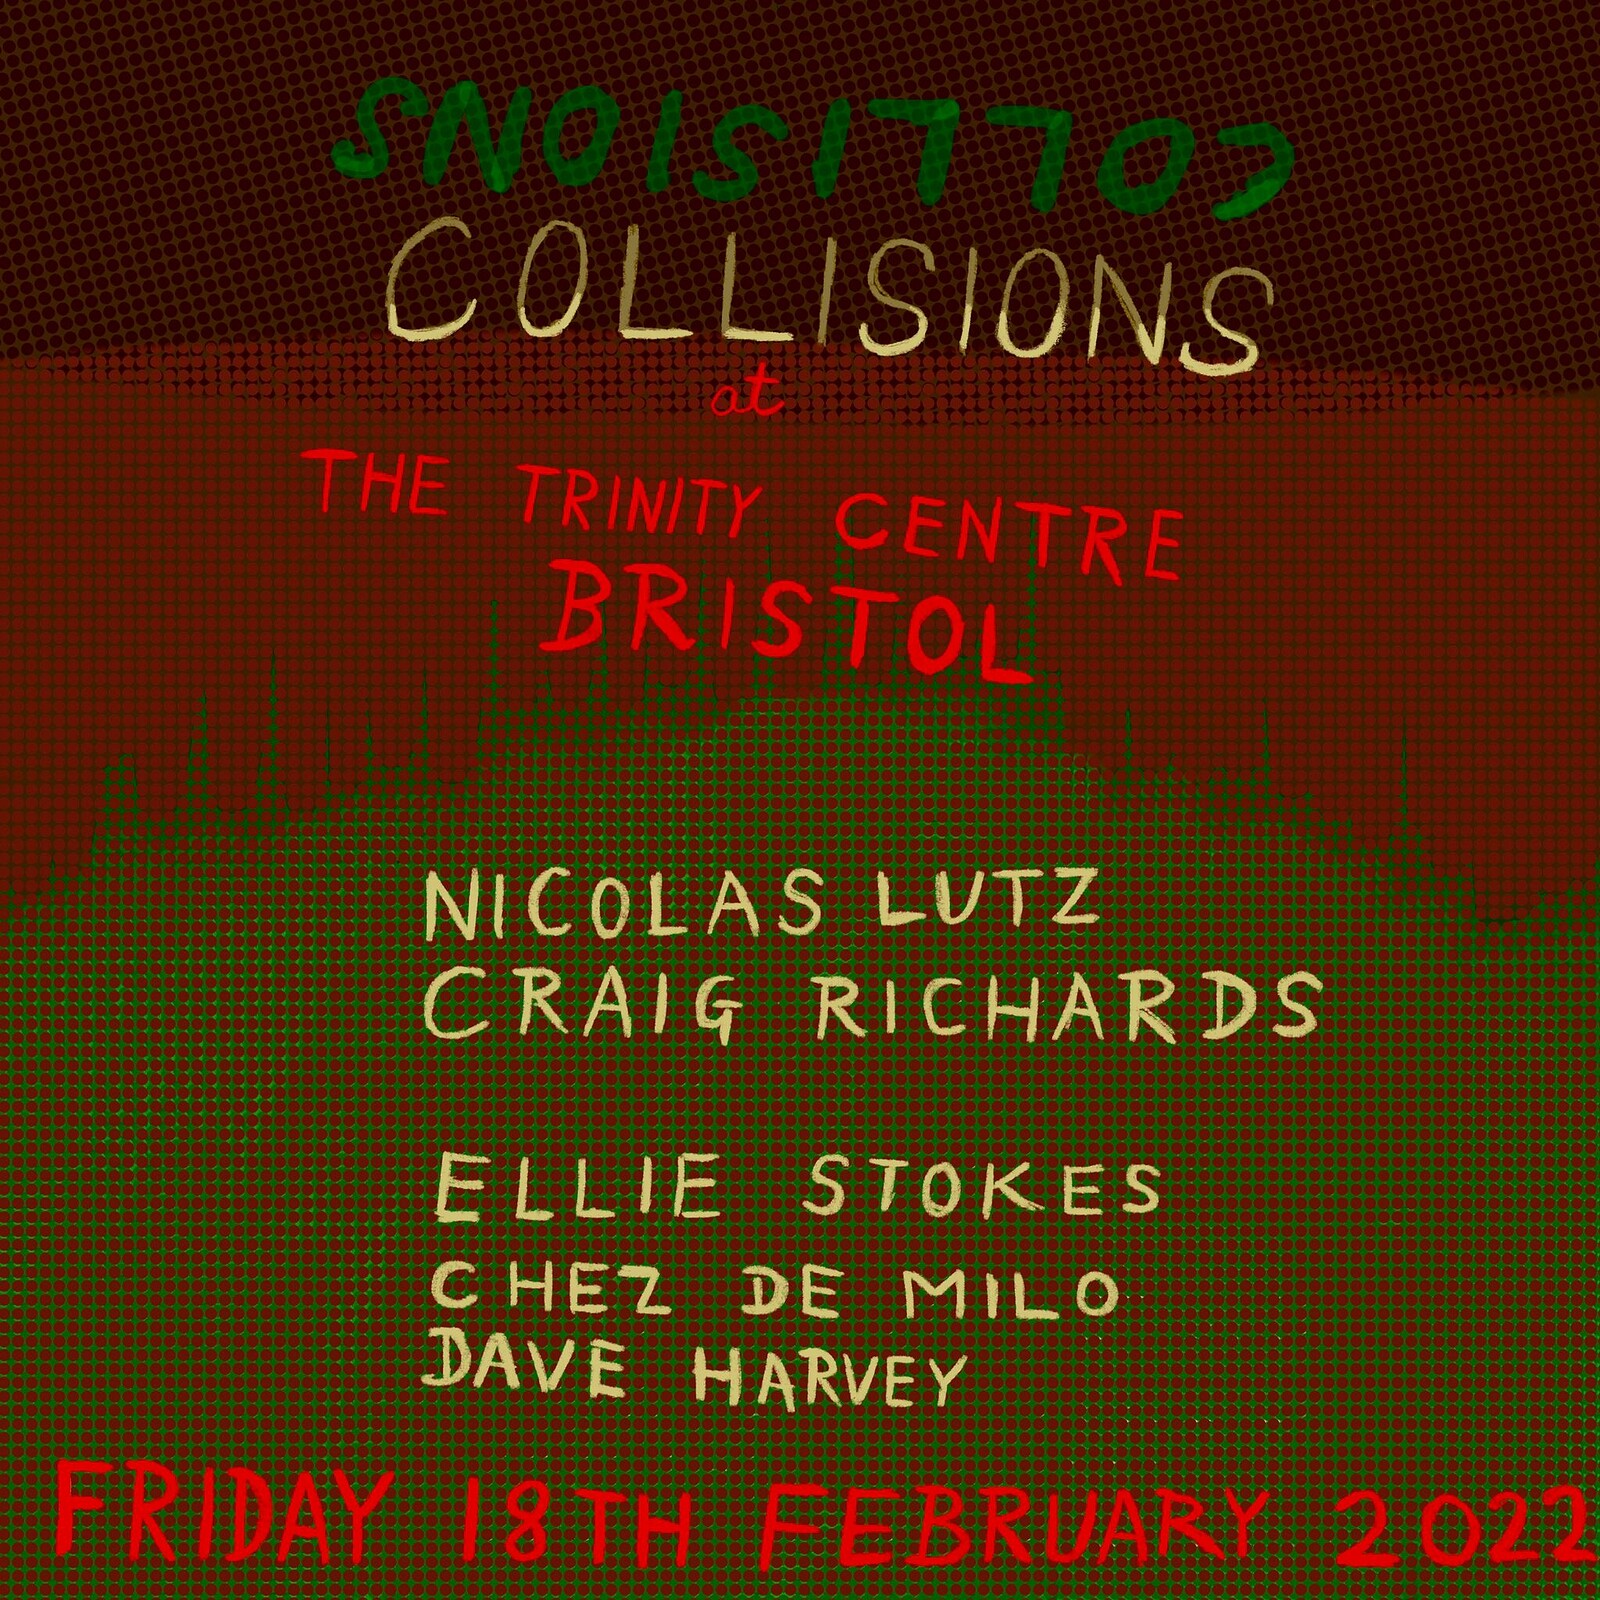 Collisions pt. 2 - Nicolas Lutz & Craig Richards at The Trinity Centre